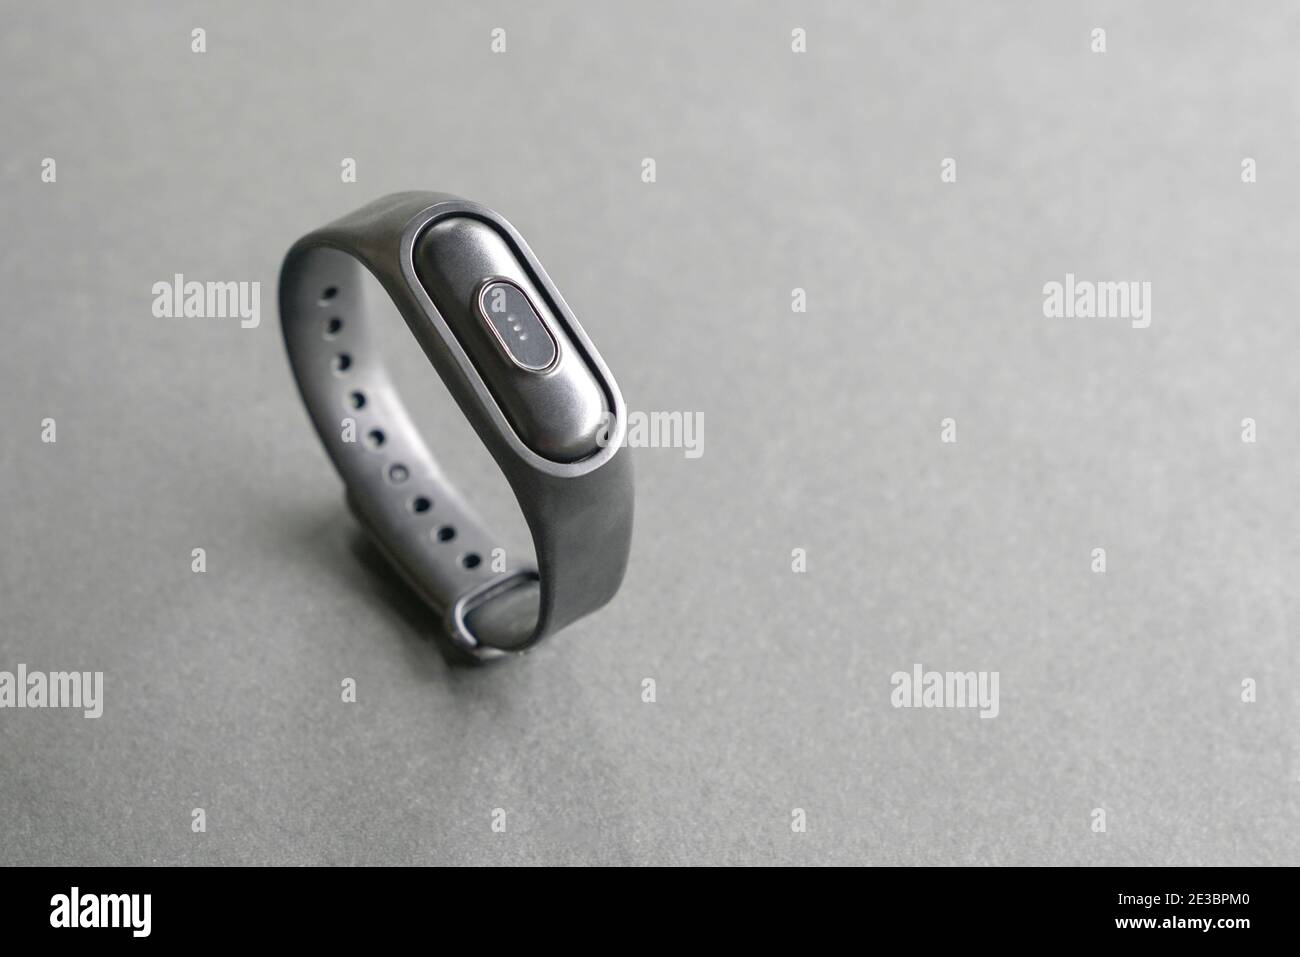 Intelligent health watch bracelet on black background. Copy space. Stock Photo